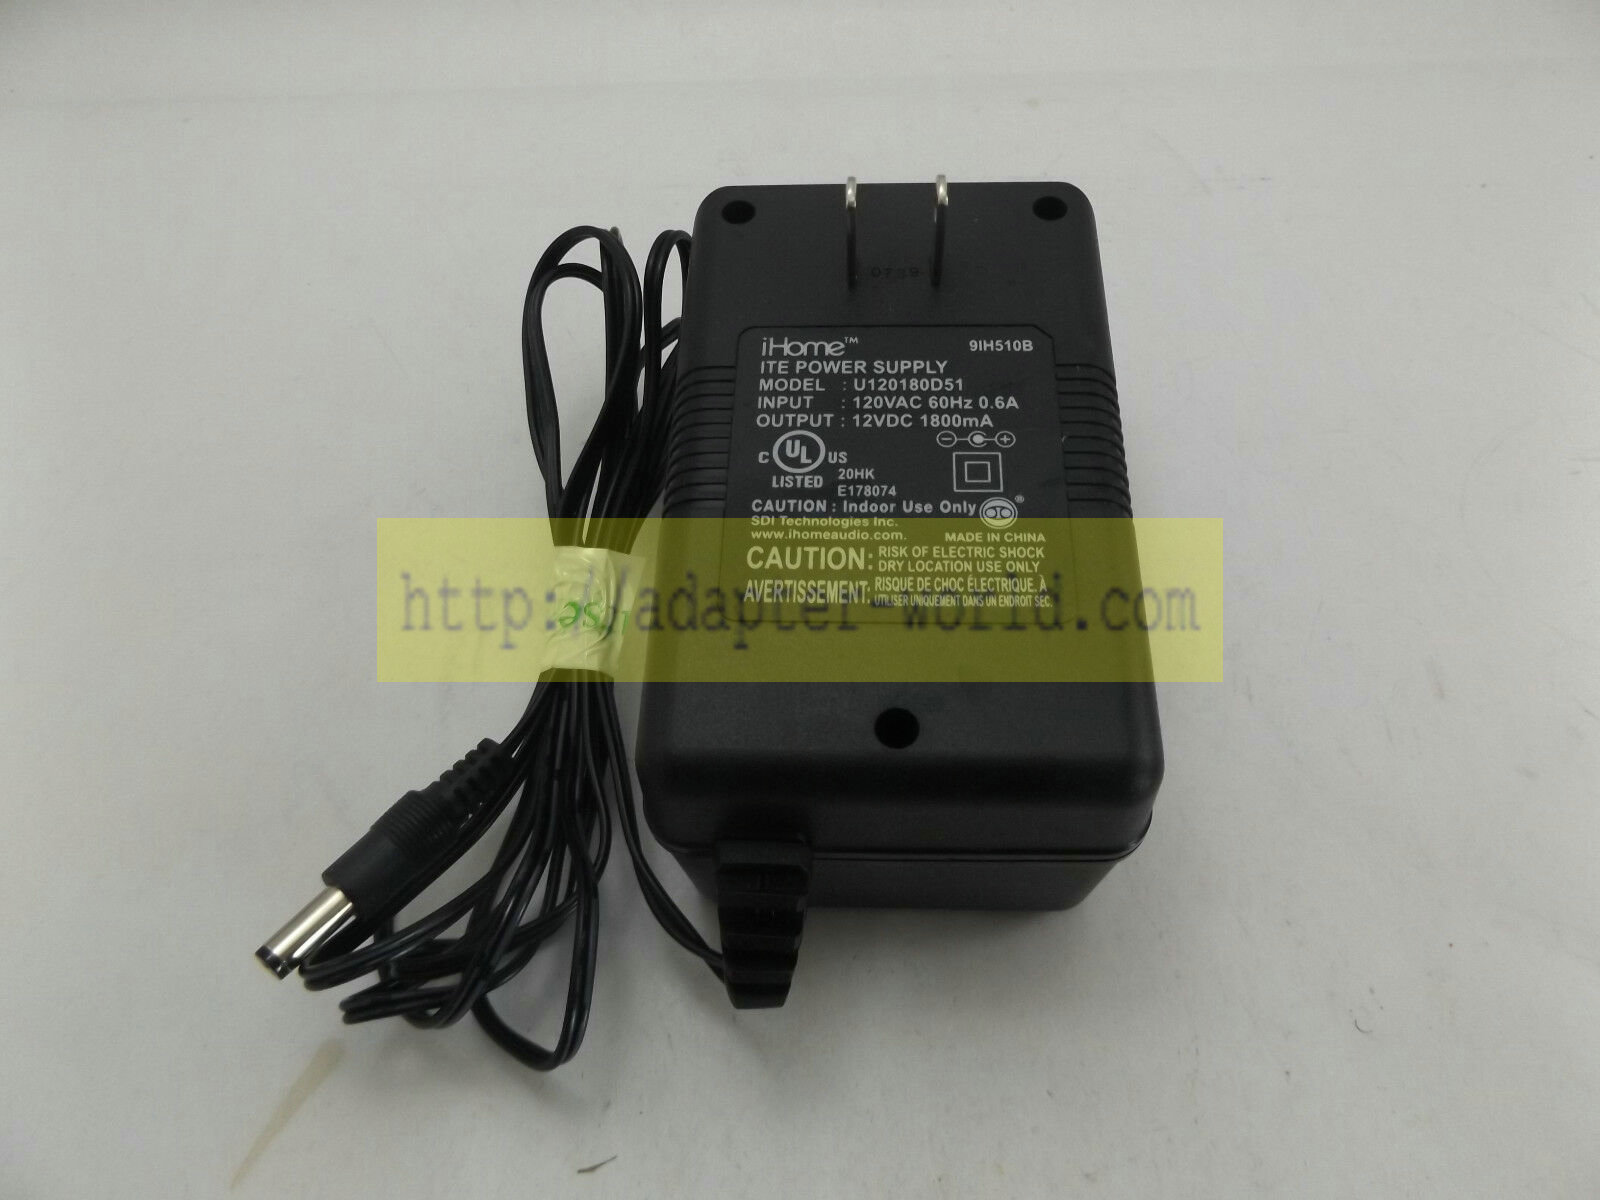 *Brand NEW* iHome ITE 12VDC 1800mA Model U120180D51 9IH510B AC Adapter Power Supply